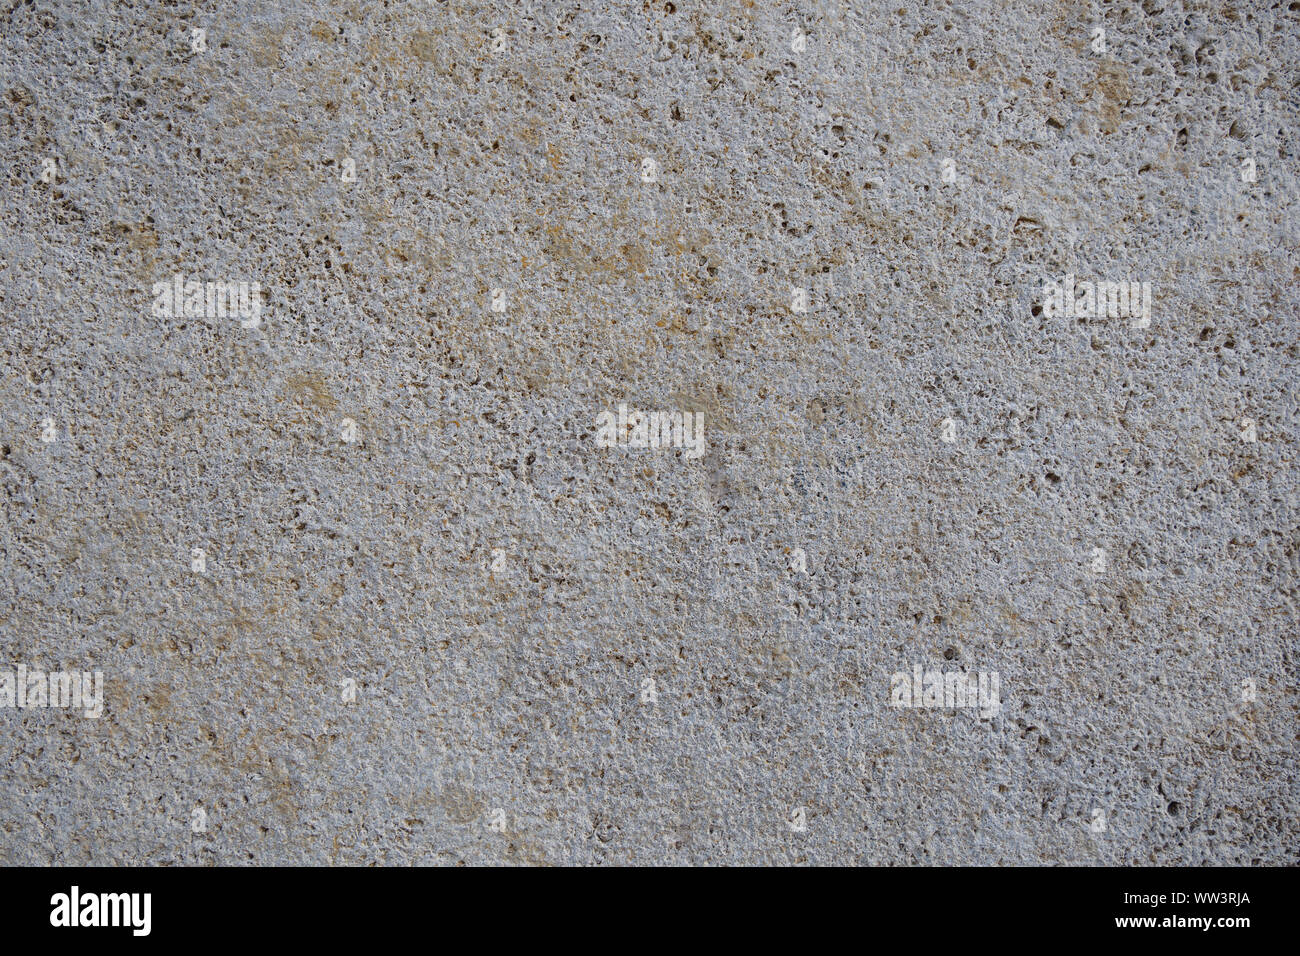 Rough white natural stone travertine with small random cavities. Limestone building material. Stock Photo